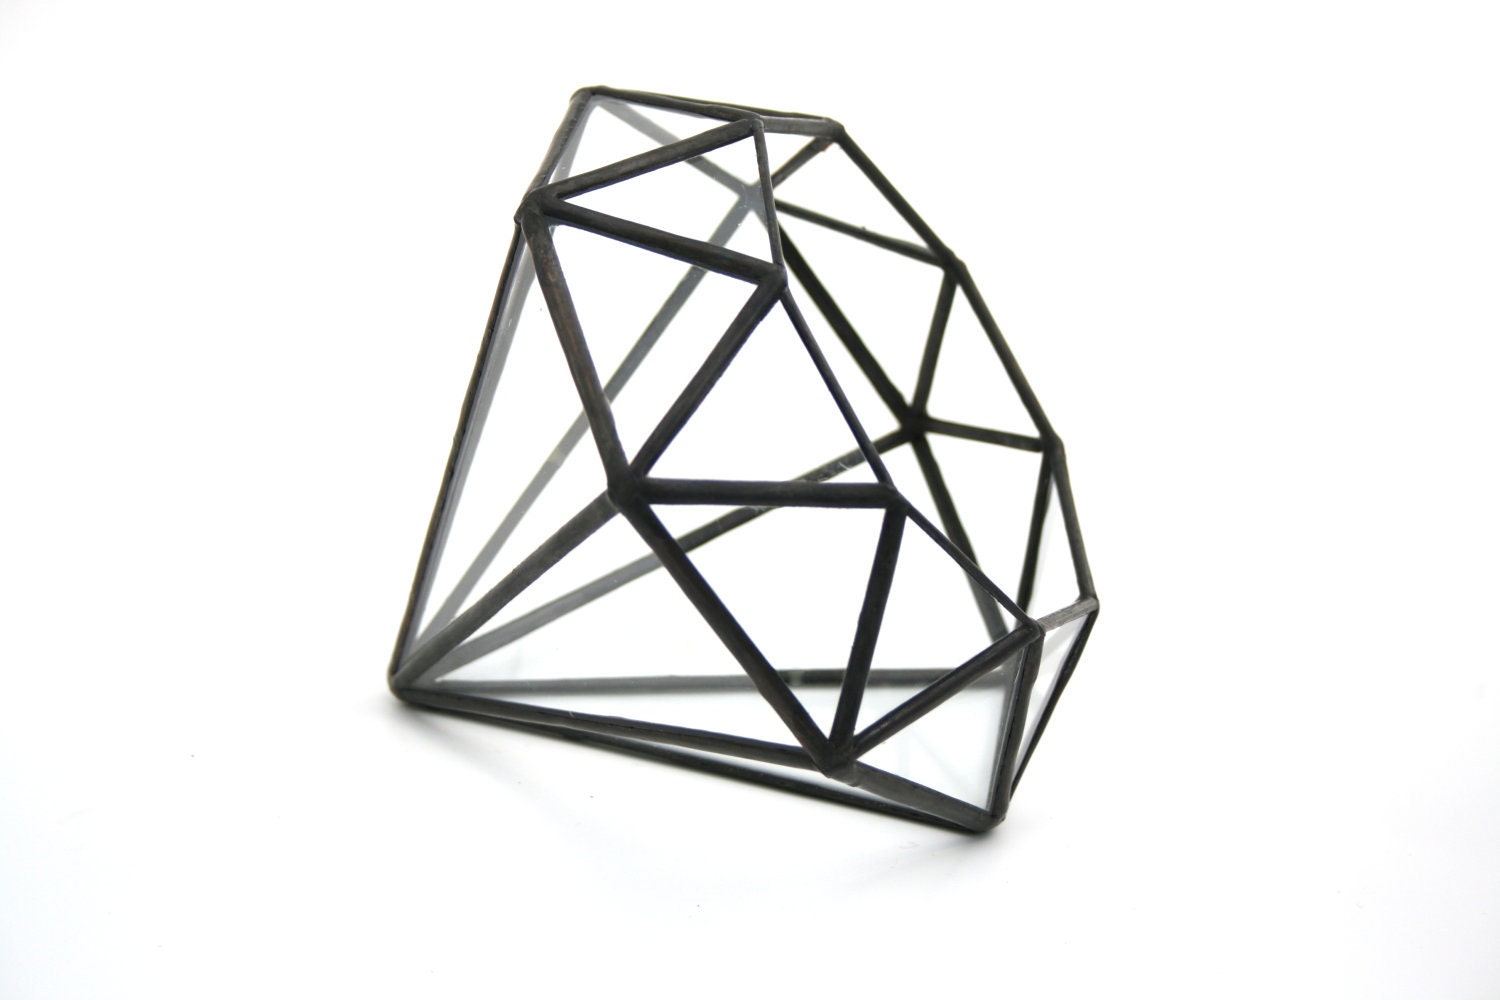 Diamond //made with recycled glass// - Medium - megamyers